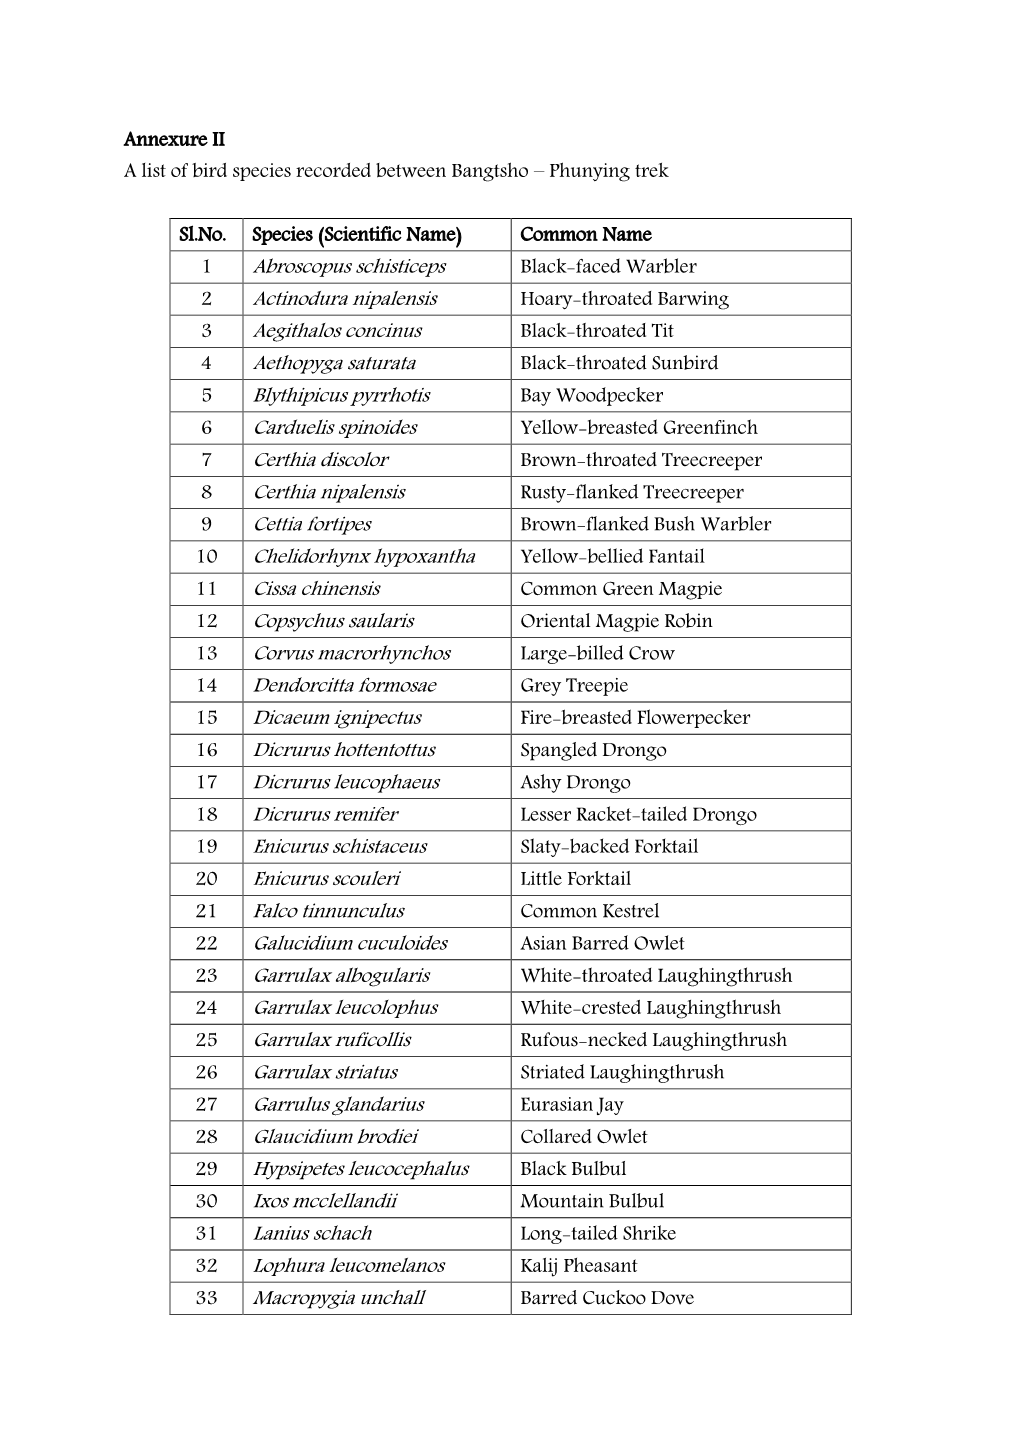 Annexure II a List of Bird Species Recorded Between Bangtsho – Phunying Trek